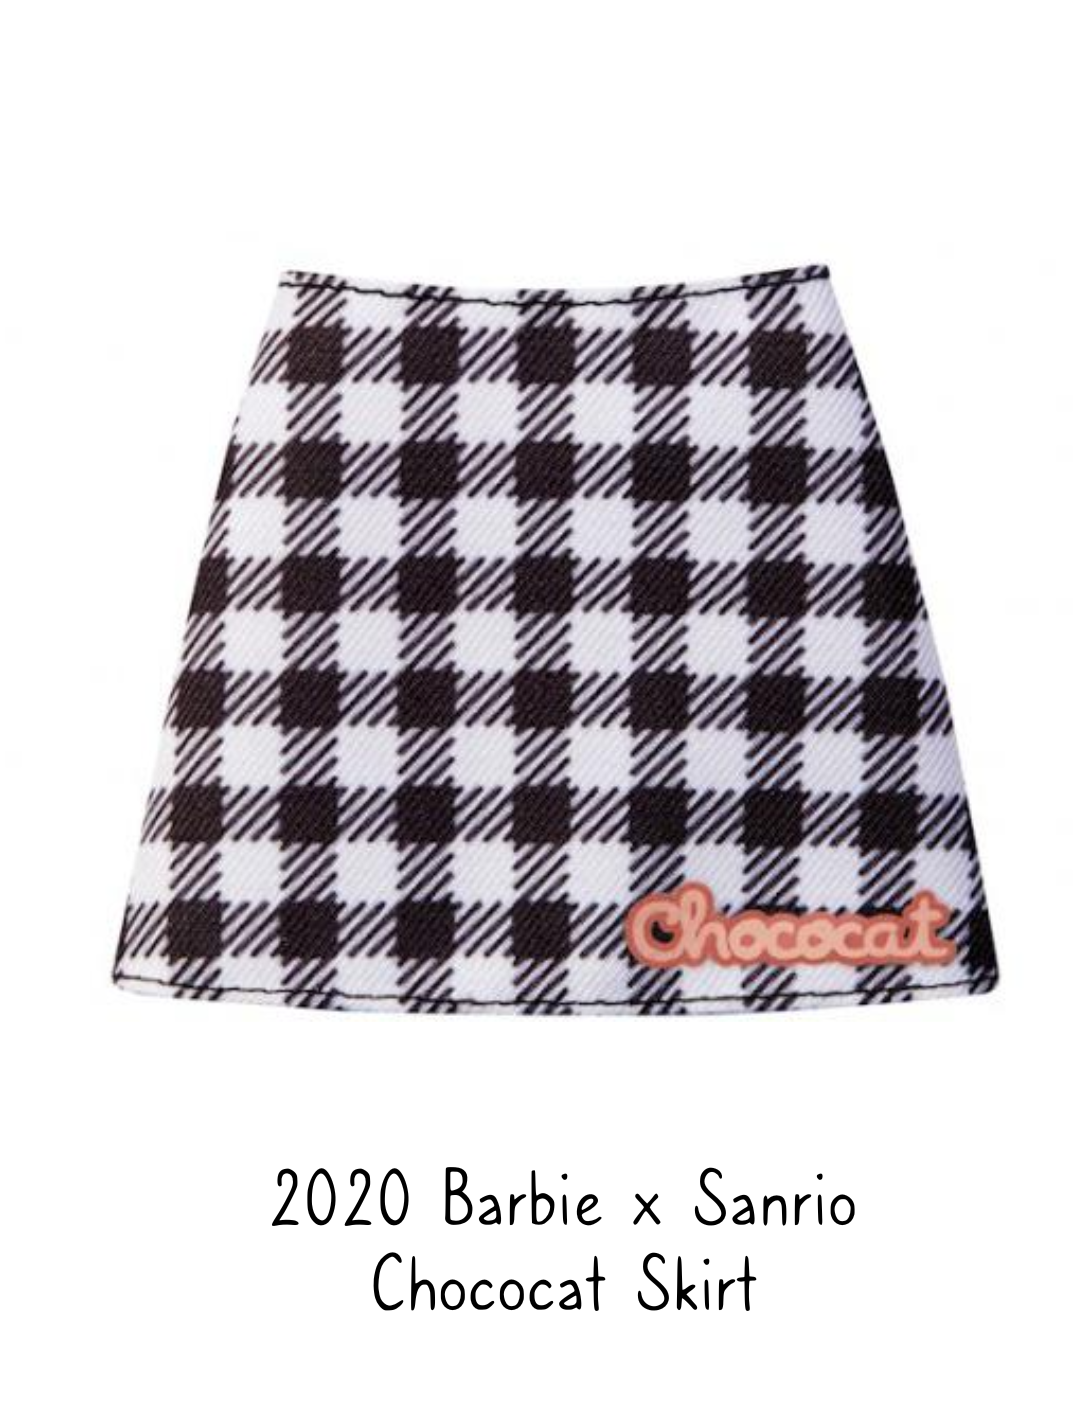 2020 Barbie x Sanrio Chococat Skirt